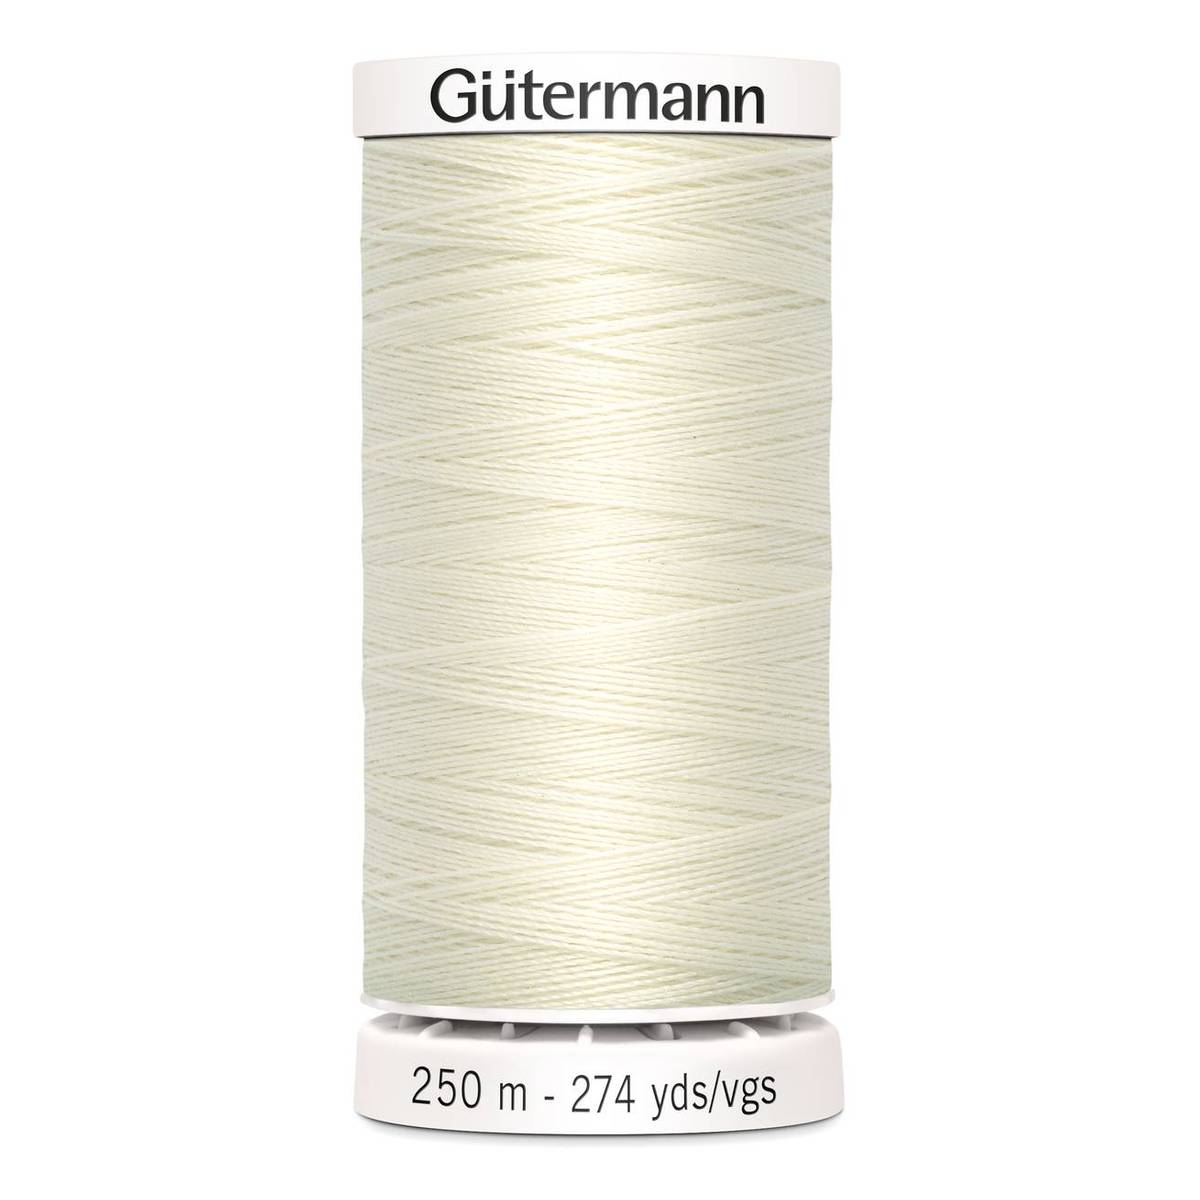 Gutermann White Sew All Thread 250m (1)